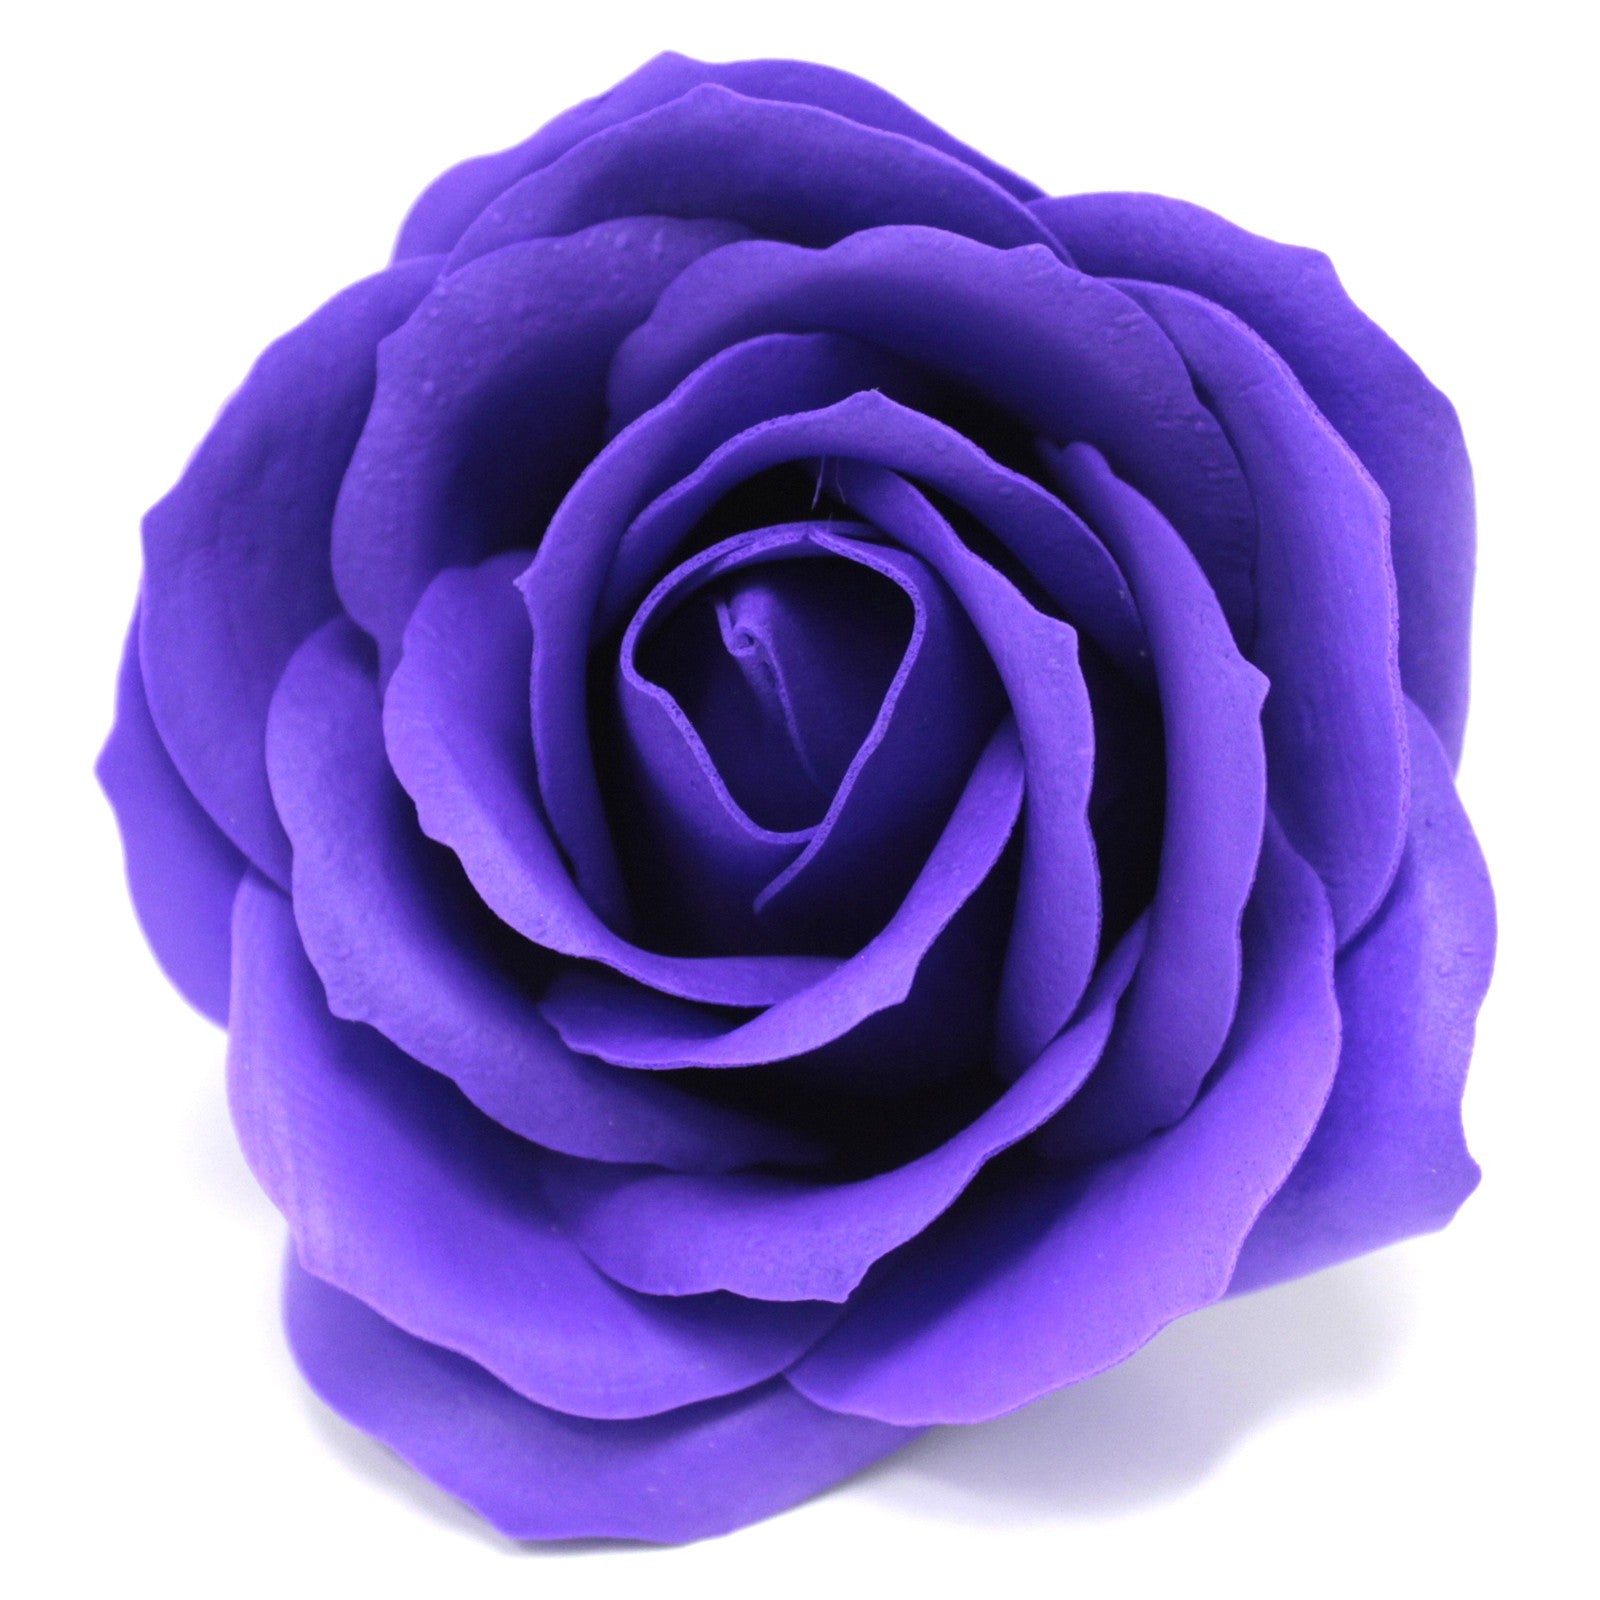 View Craft Soap Flowers Lrg Rose Violet x 10 pcs information